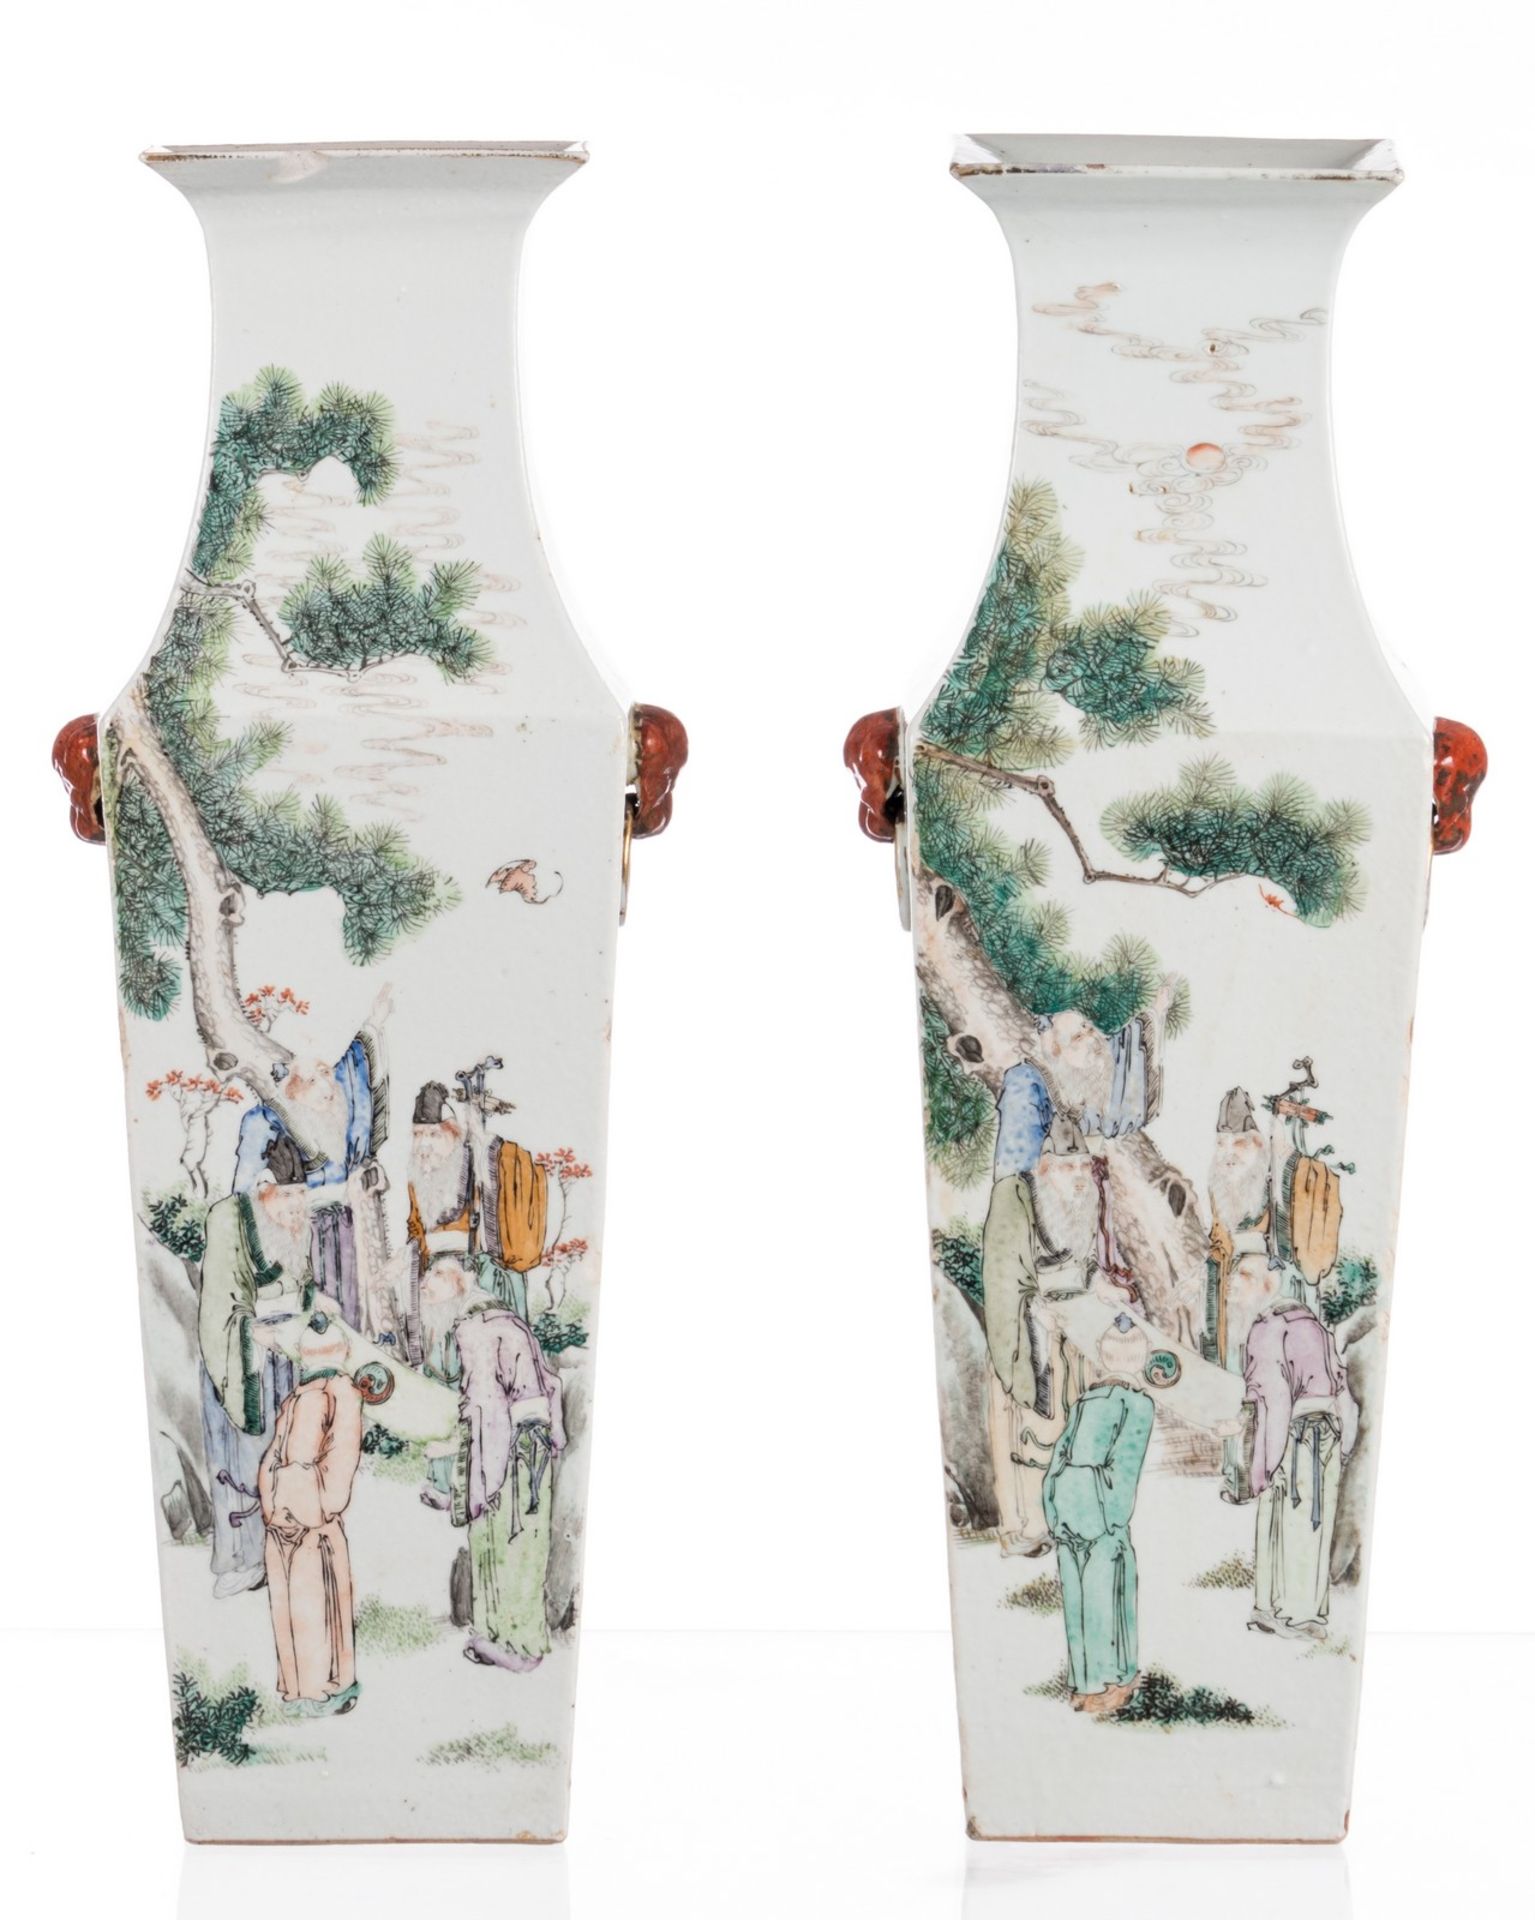 Two quadrangular vases, China, polychrome decorated with fishermen, literati and calligraphic texts, - Image 3 of 18